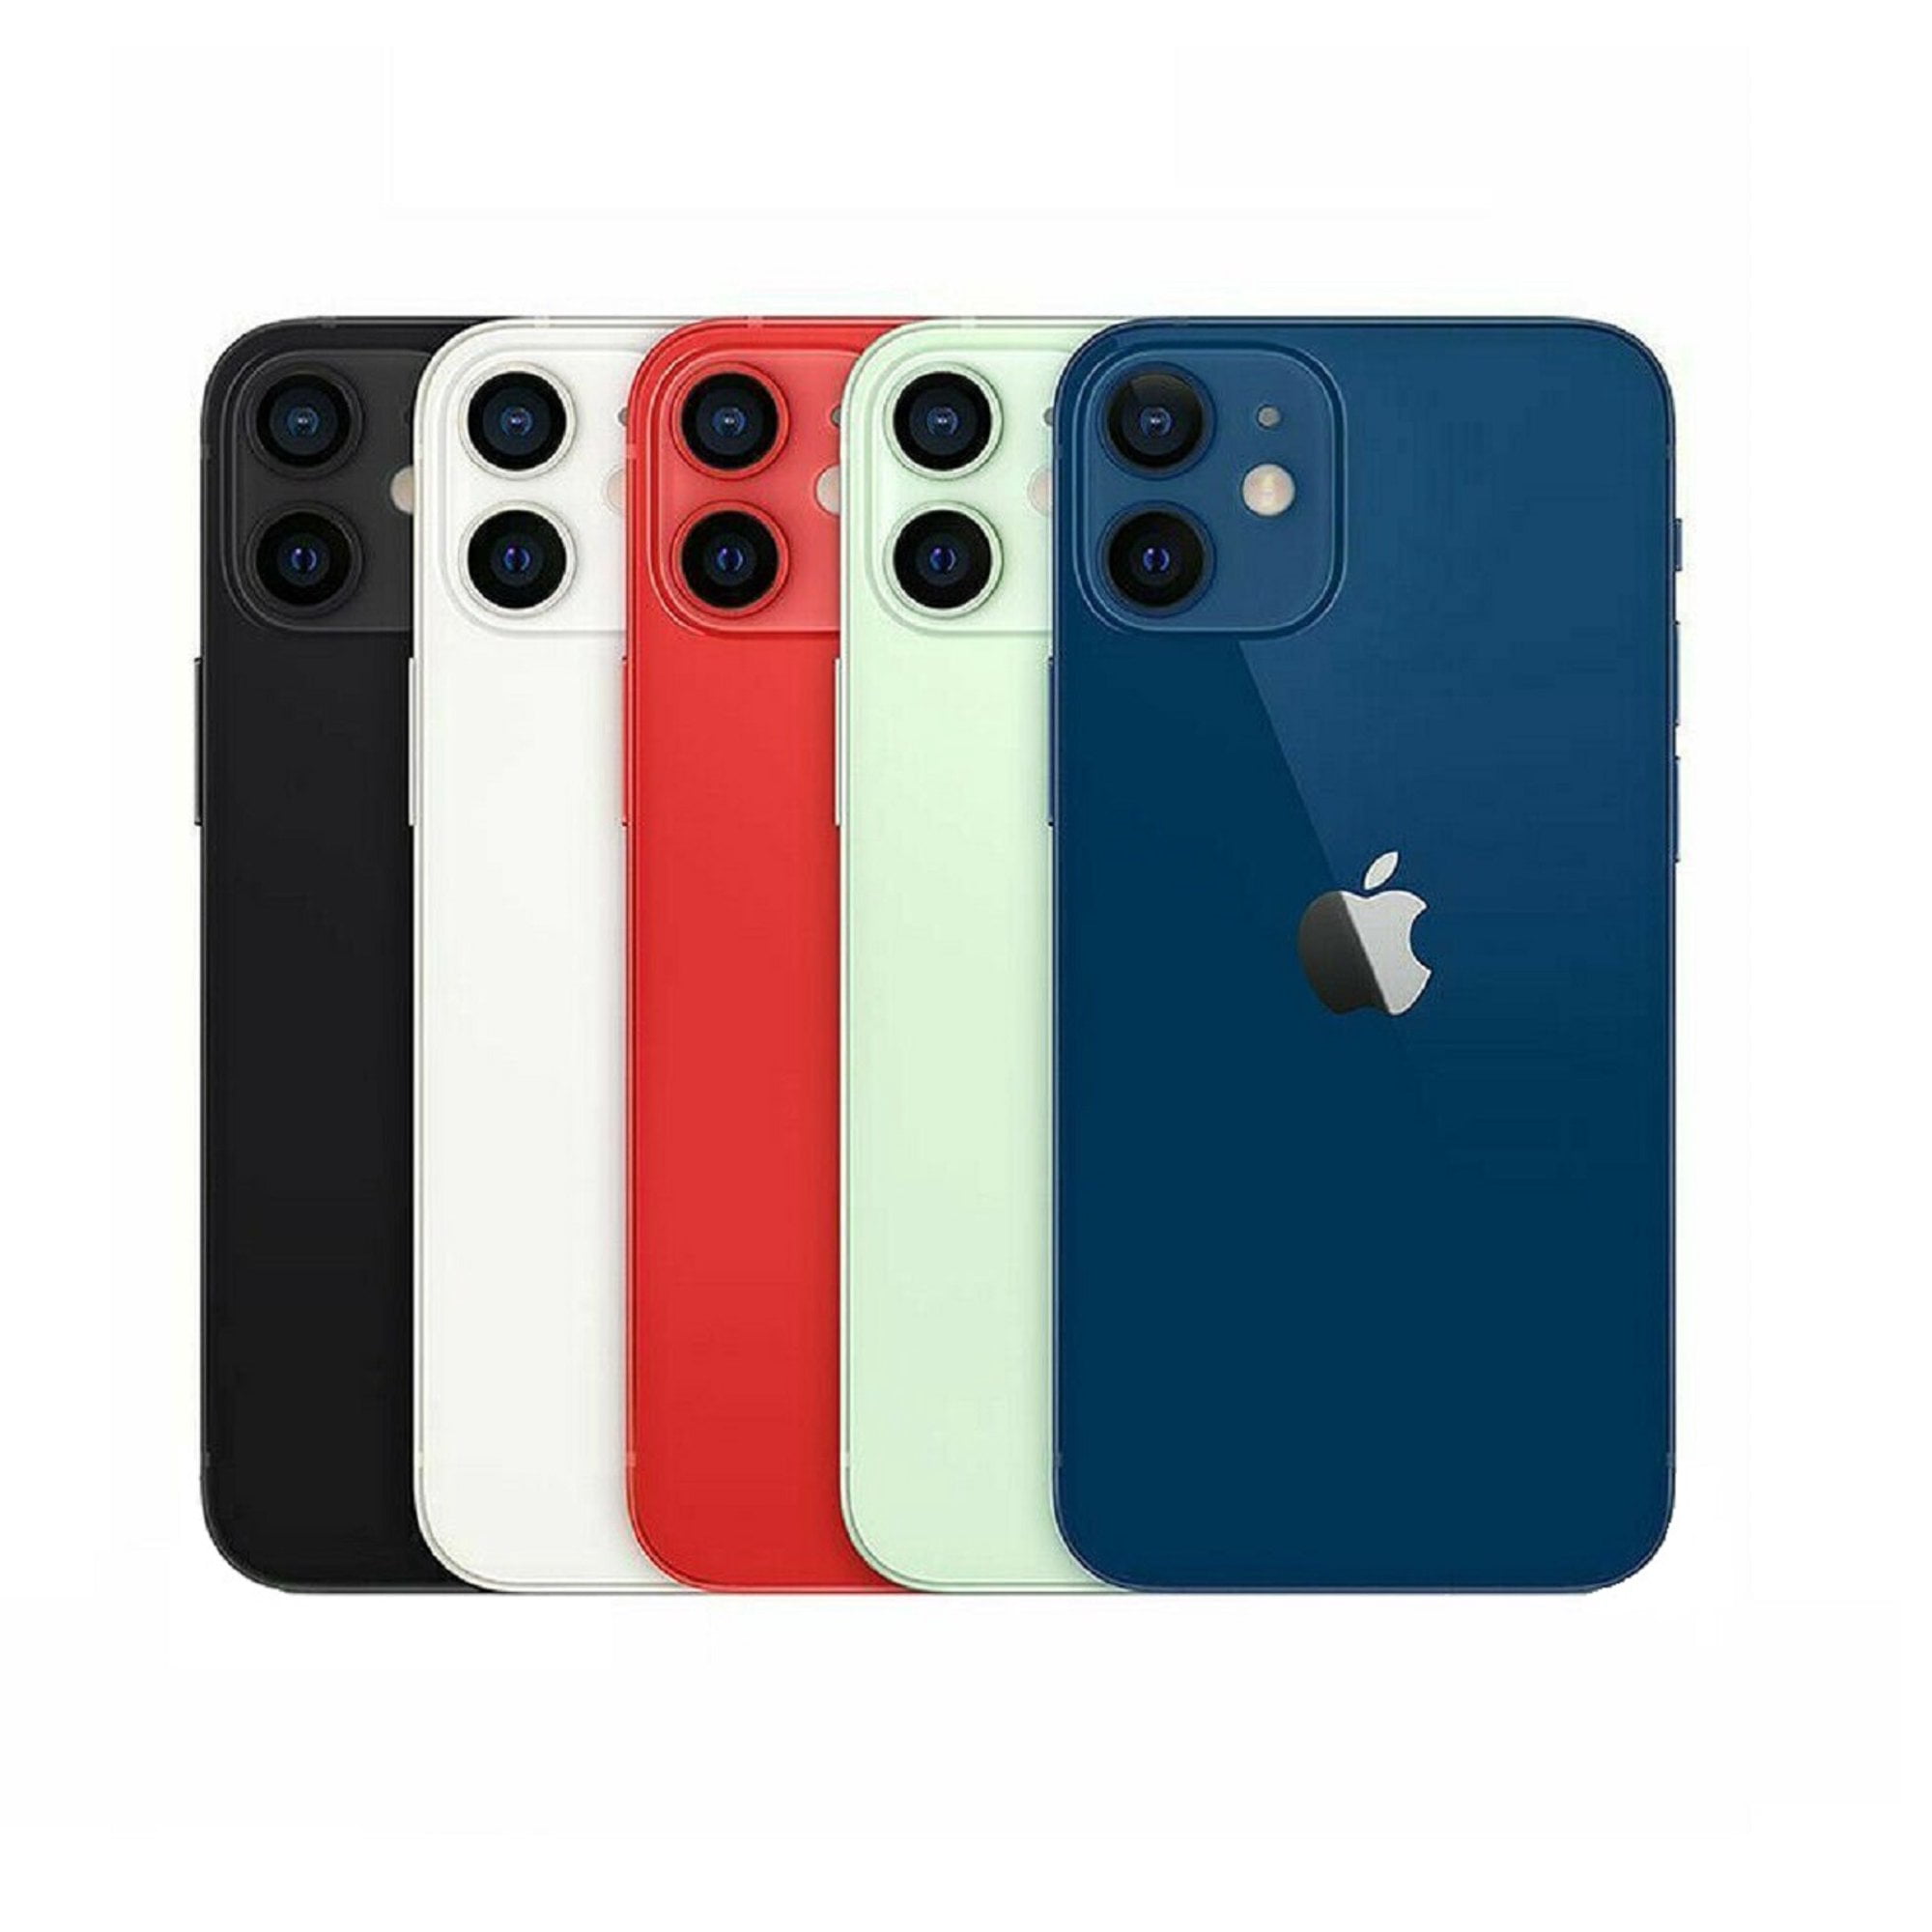 Apple iPhone 12 Mini 64GB 128GB 256GB All Colors - Factory Unlocked  Smartphone - Good Condition